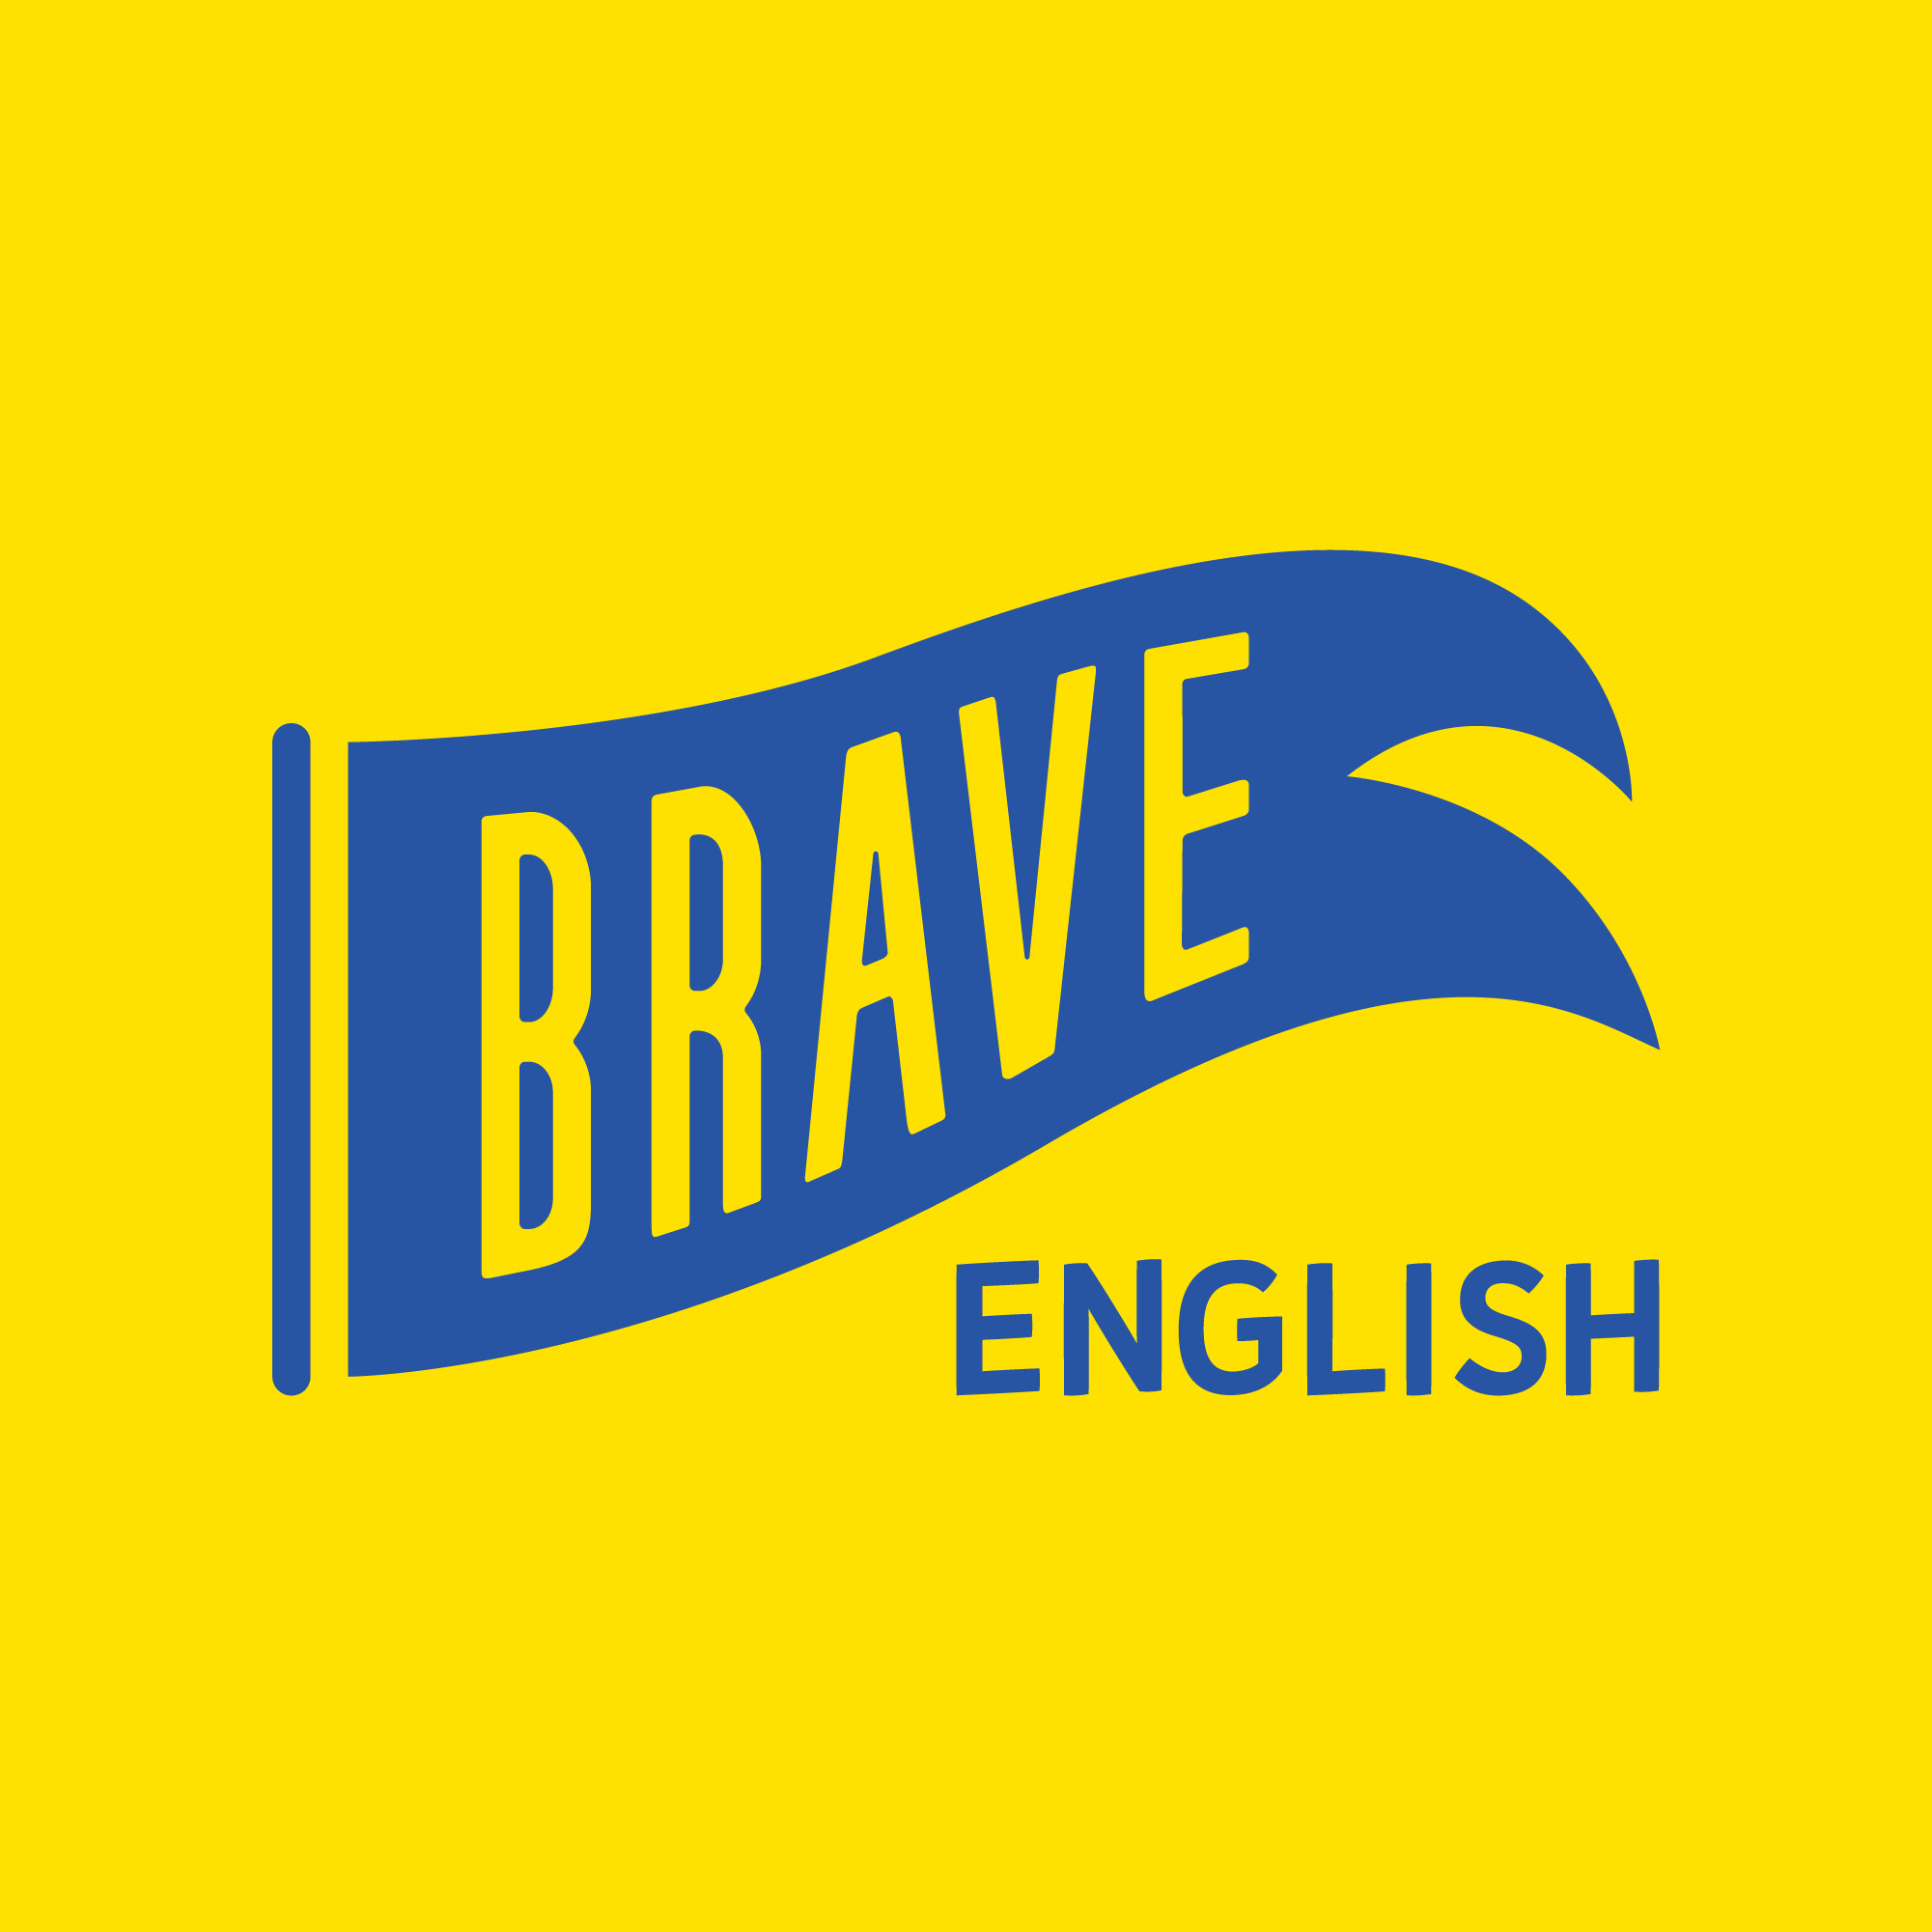 Brave English